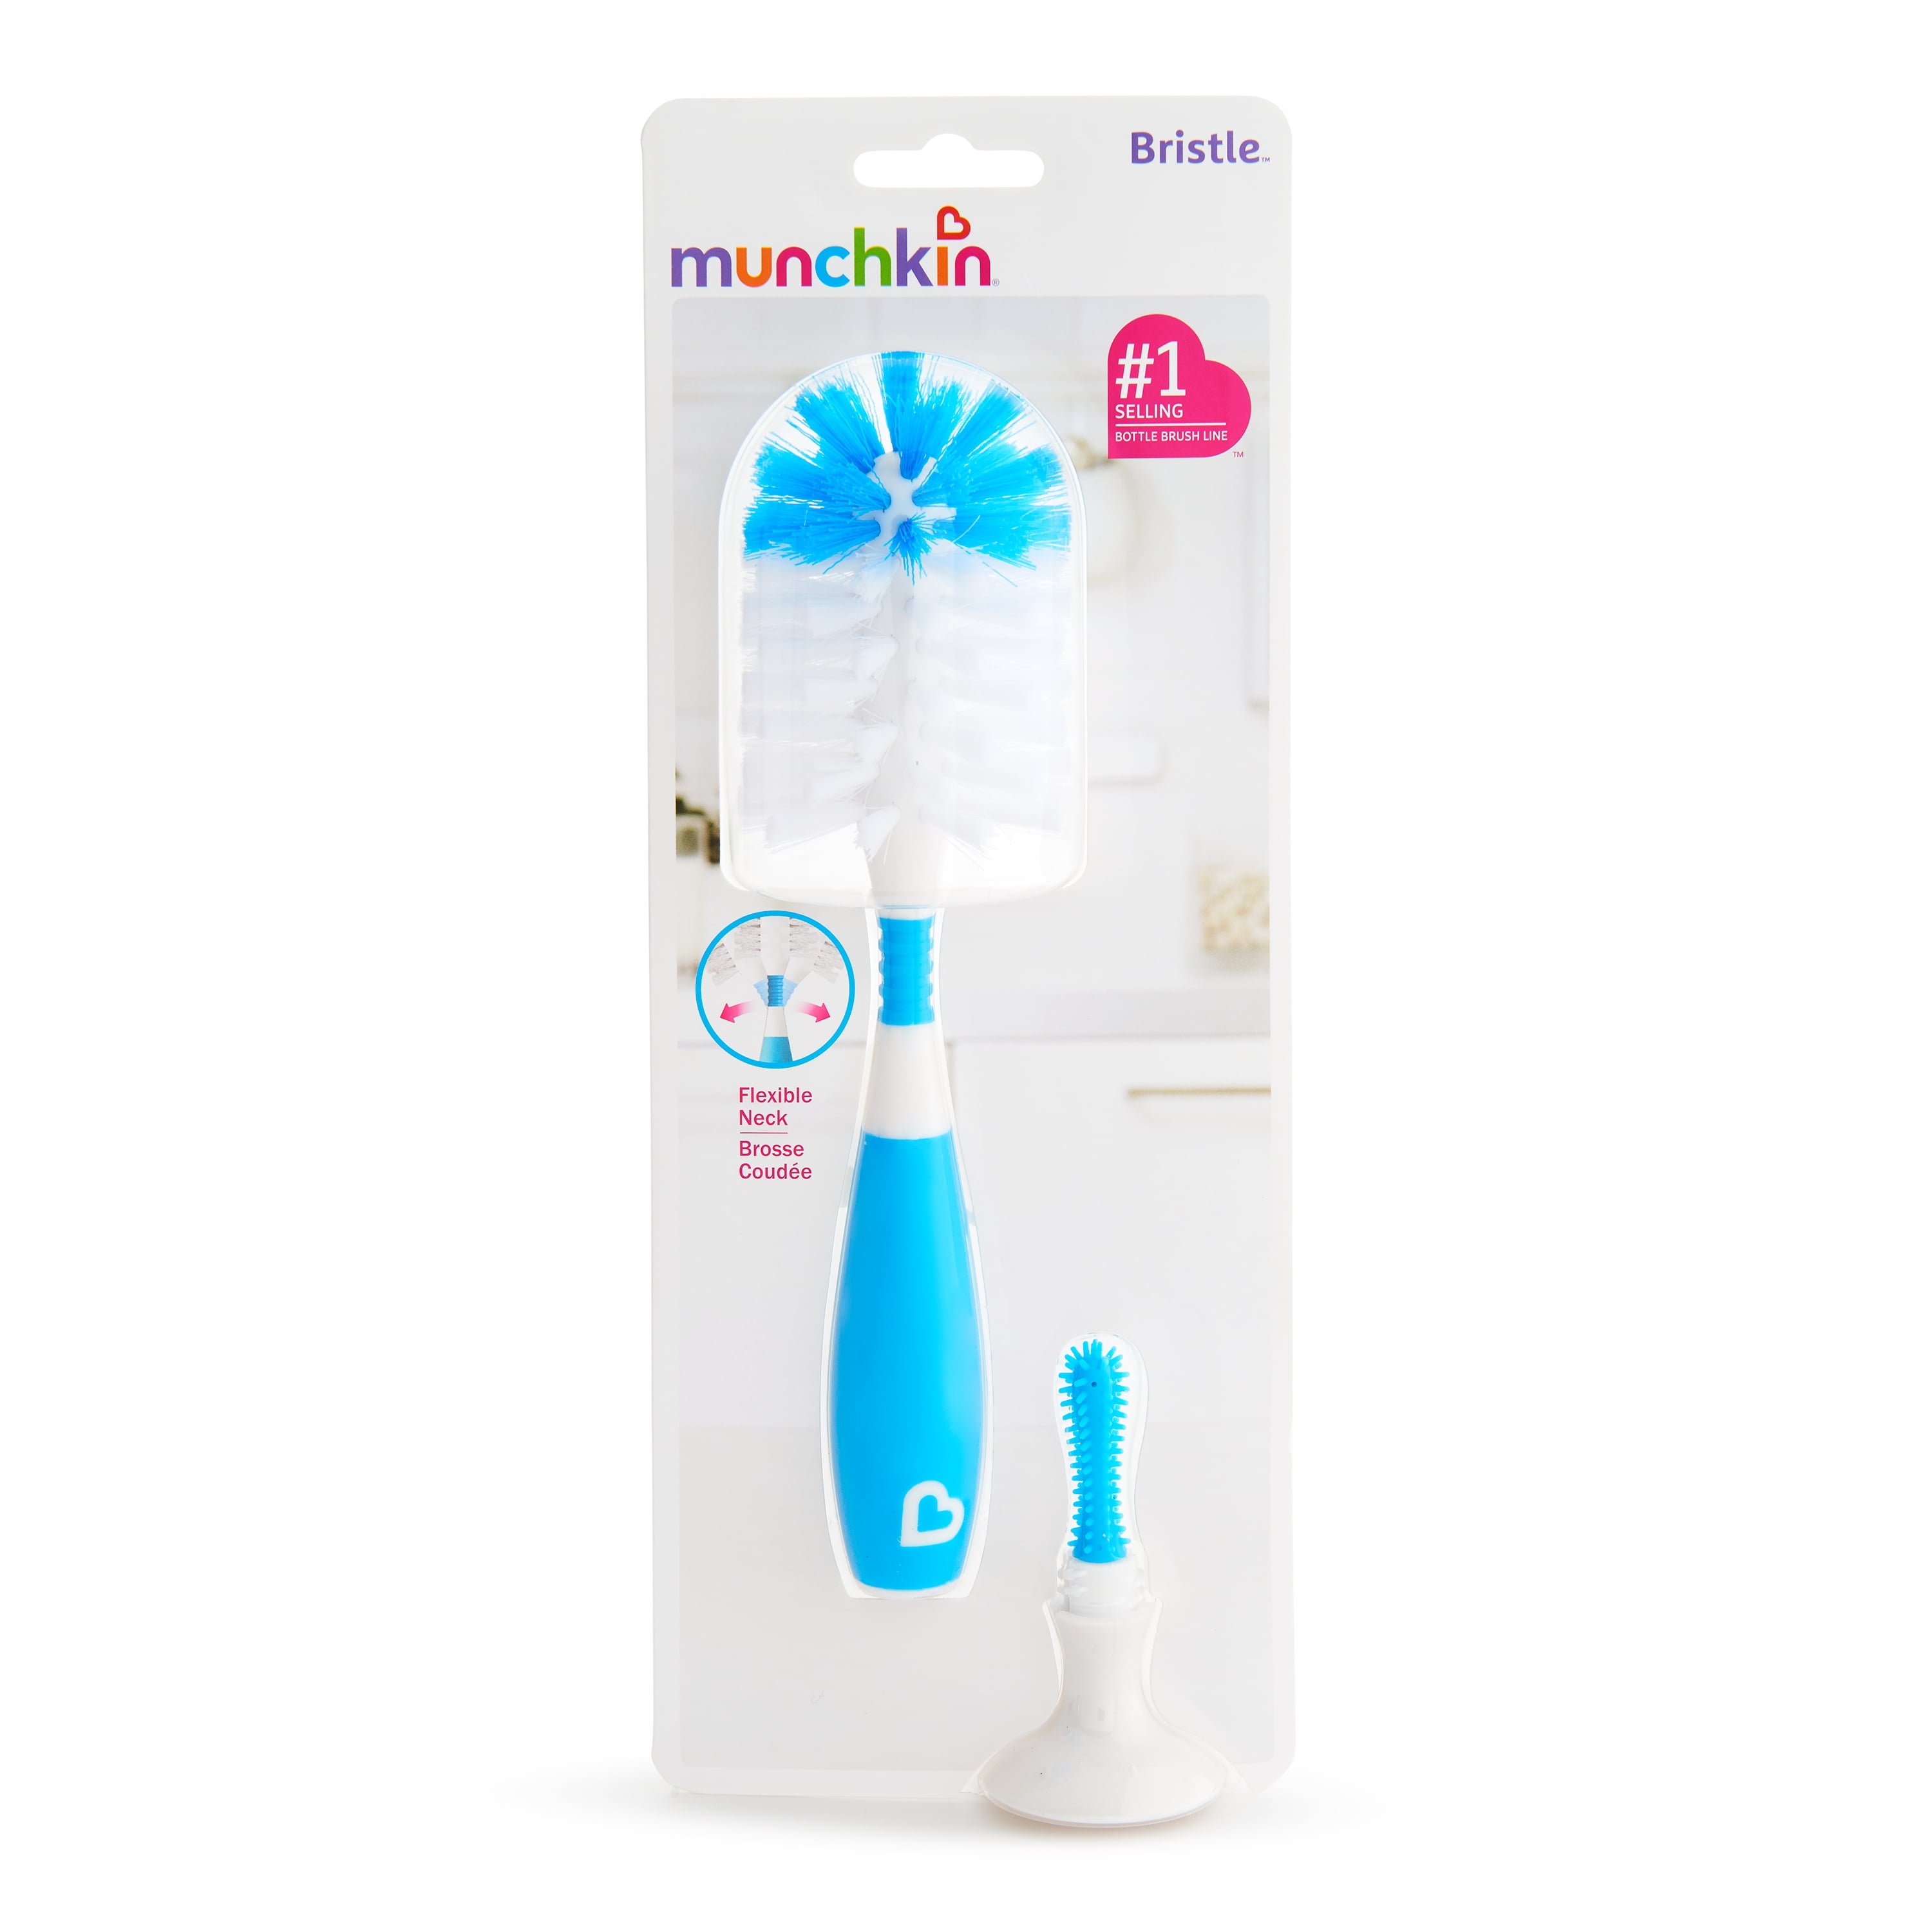 Munchkin Bristle Bottle Brush, Includes Suction Cup Base and Bonus